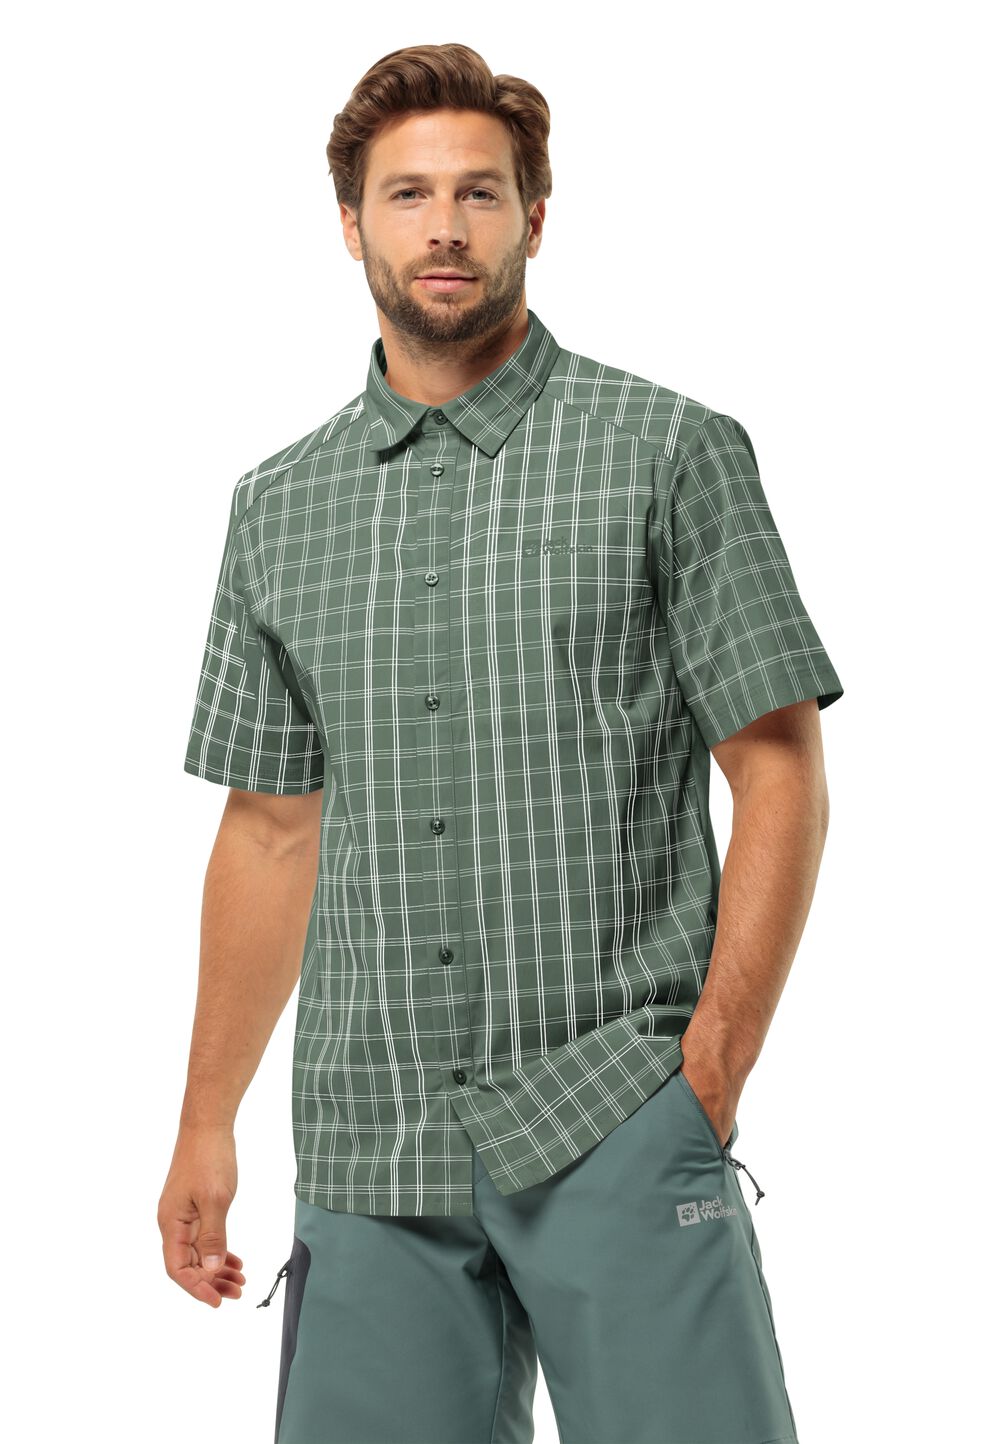 Jack Wolfskin Norbo S S Shirt Men Overhemd met korte mouwen Heren 3XL hedge green checks hedge green checks